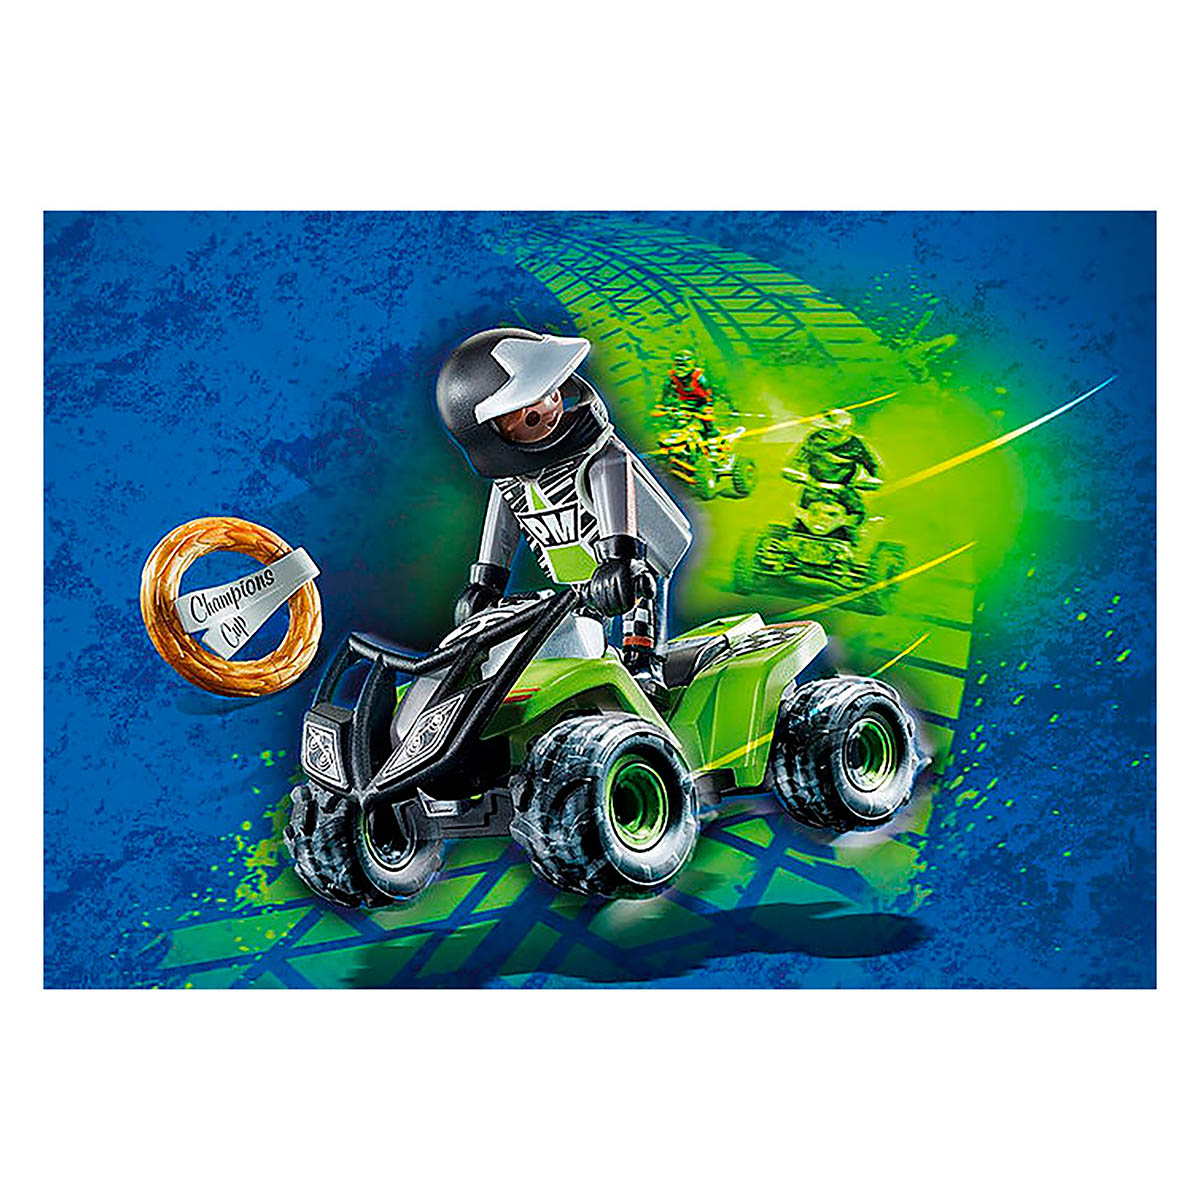 Playmobil - Corrida de Quadriciclo - City Action - 71093